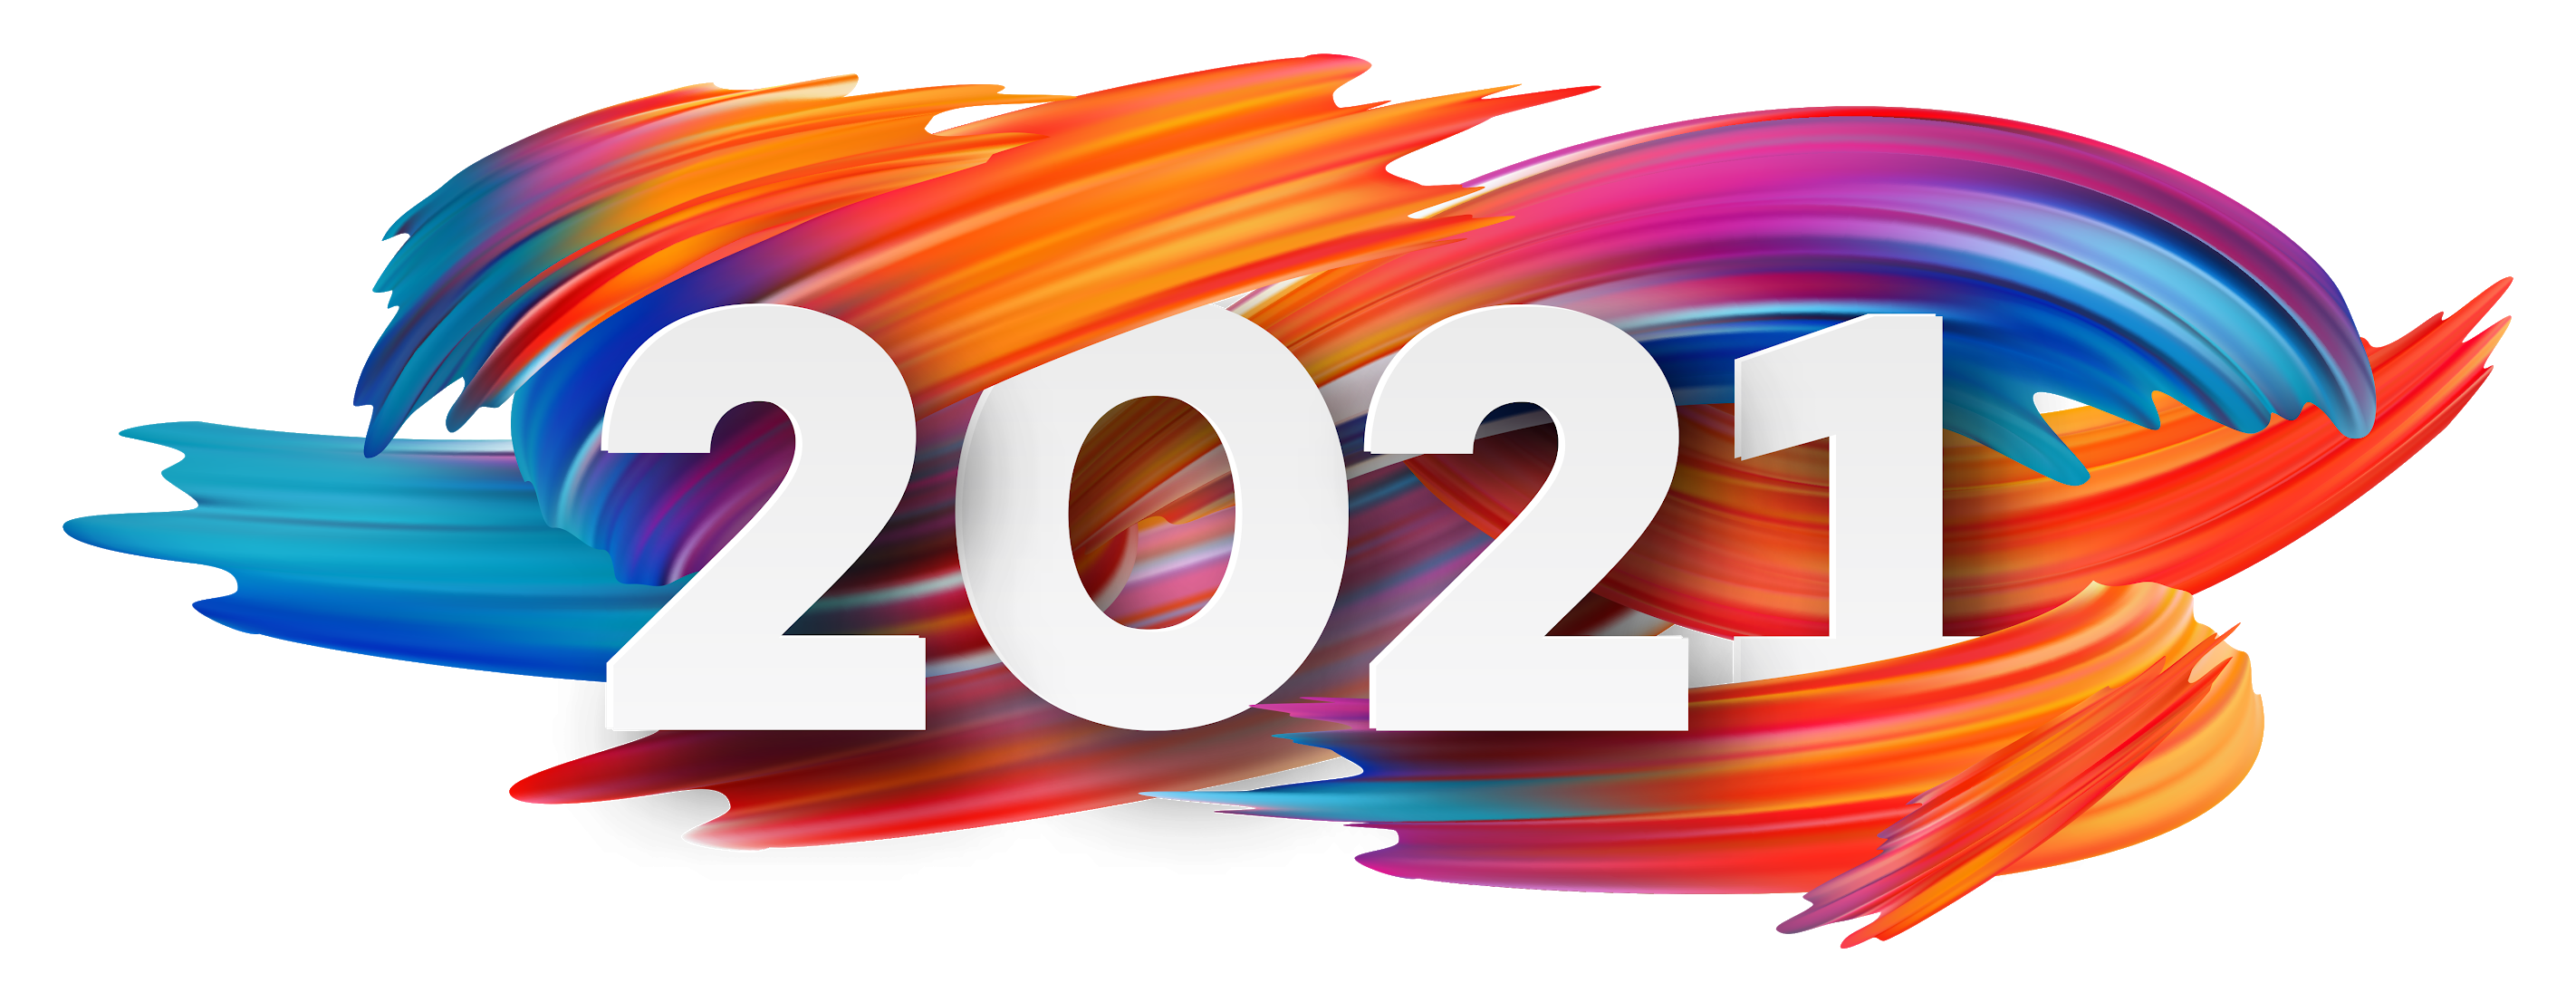 2021 Надпись. Логотипы 2021. Яркий логотип. 2022 Надпись.